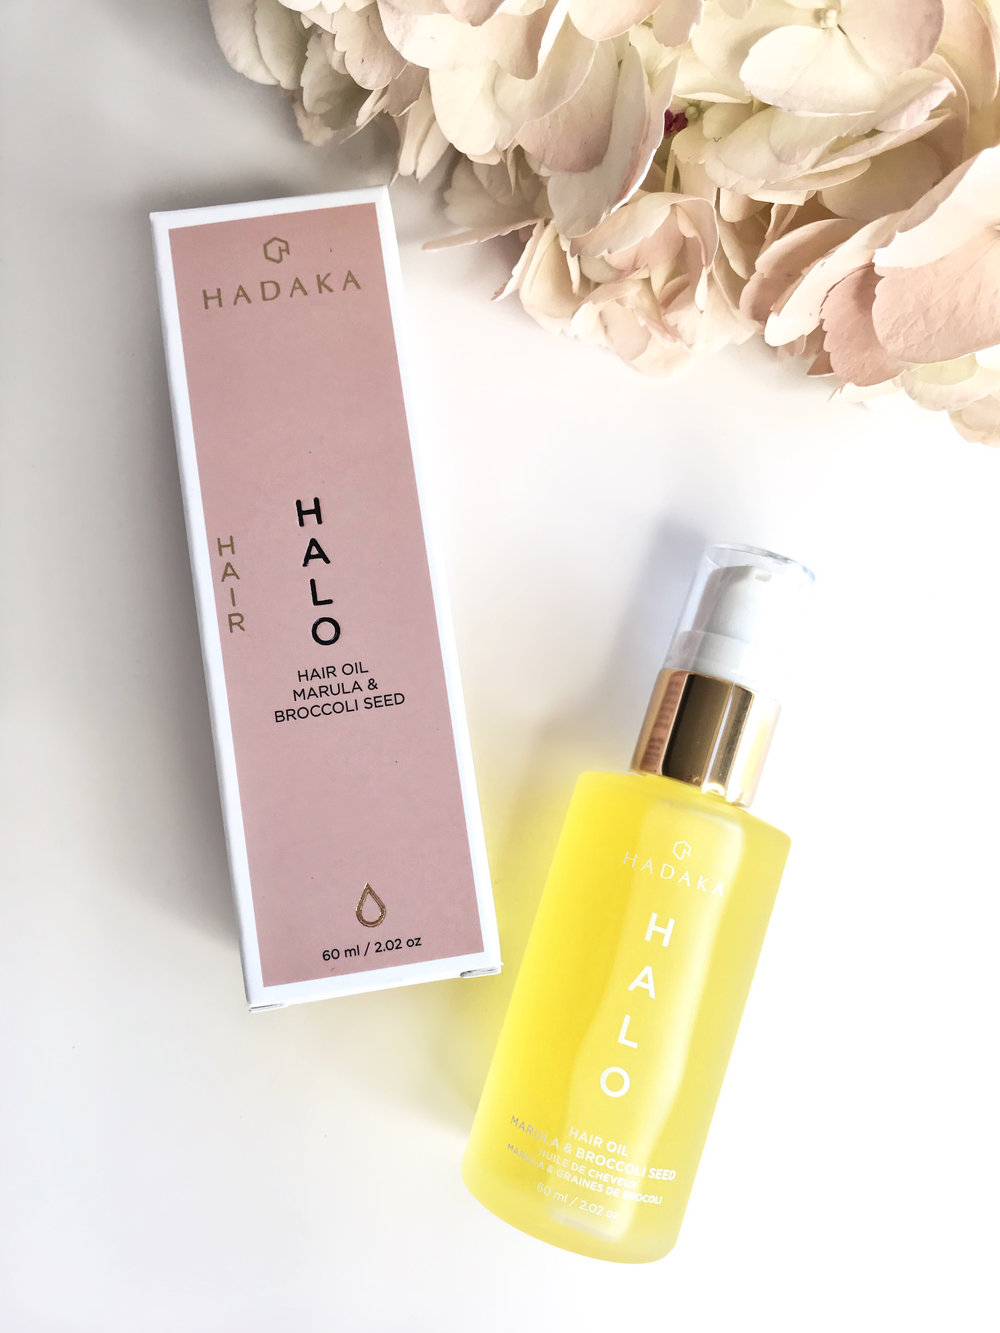 7 Uses of HALO Hair Oil — HADAKA